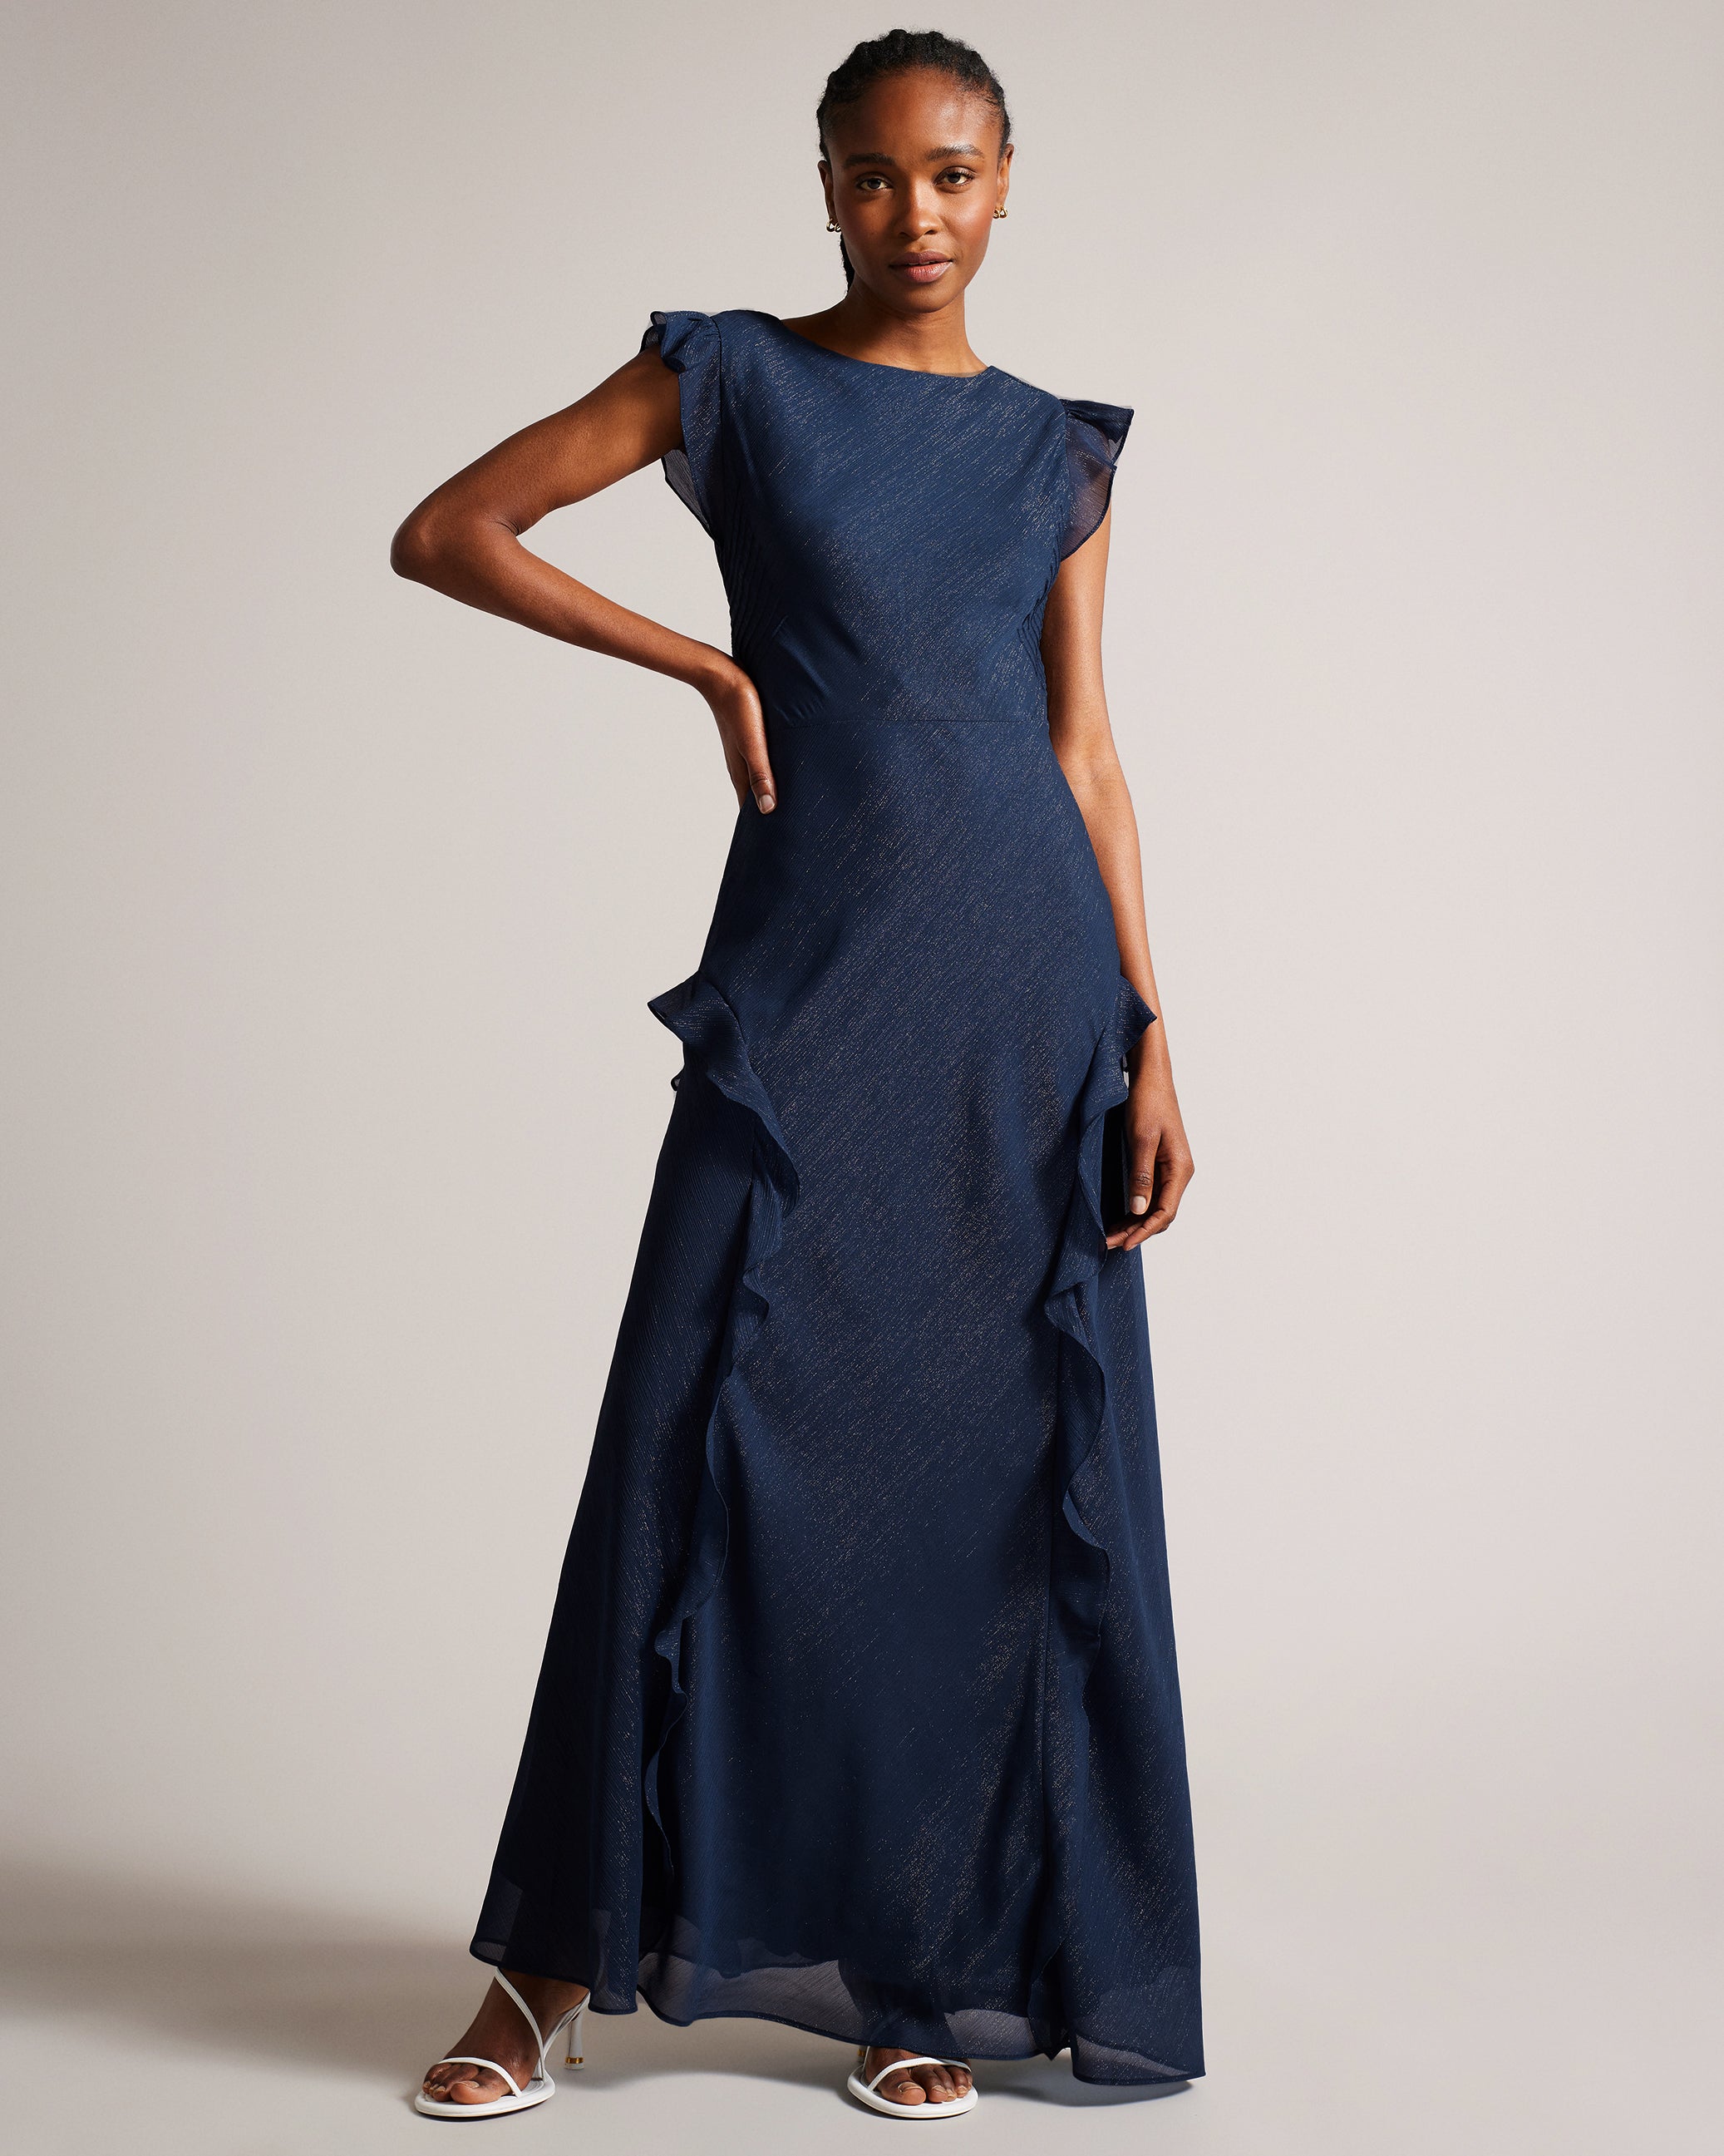 SkxN Luxe Built-in Shapewear Dress Shaping Sleeveless Summer Maxi Dress